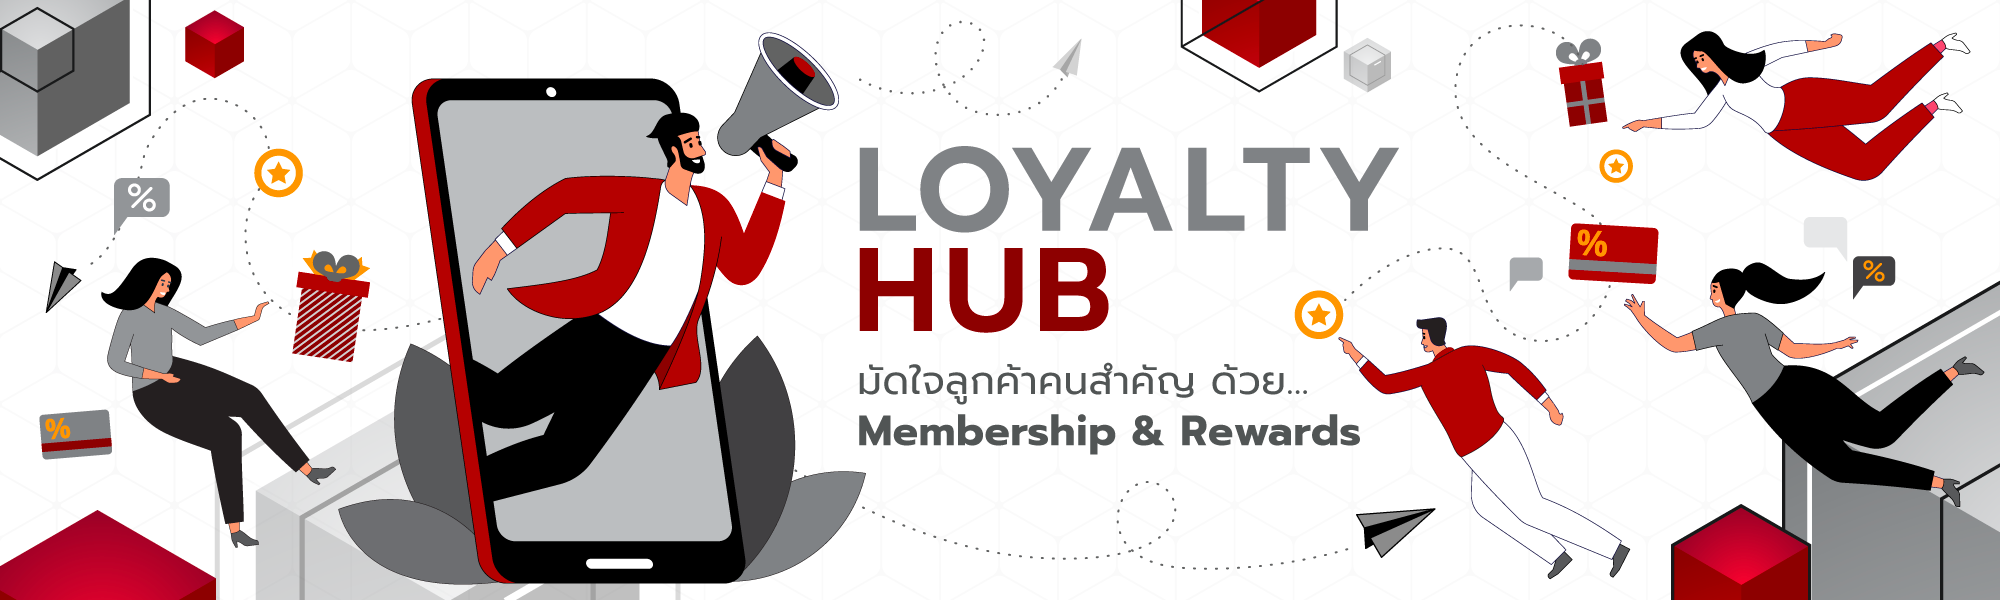 1-Web-Banner-Loyalty-Hub-2021